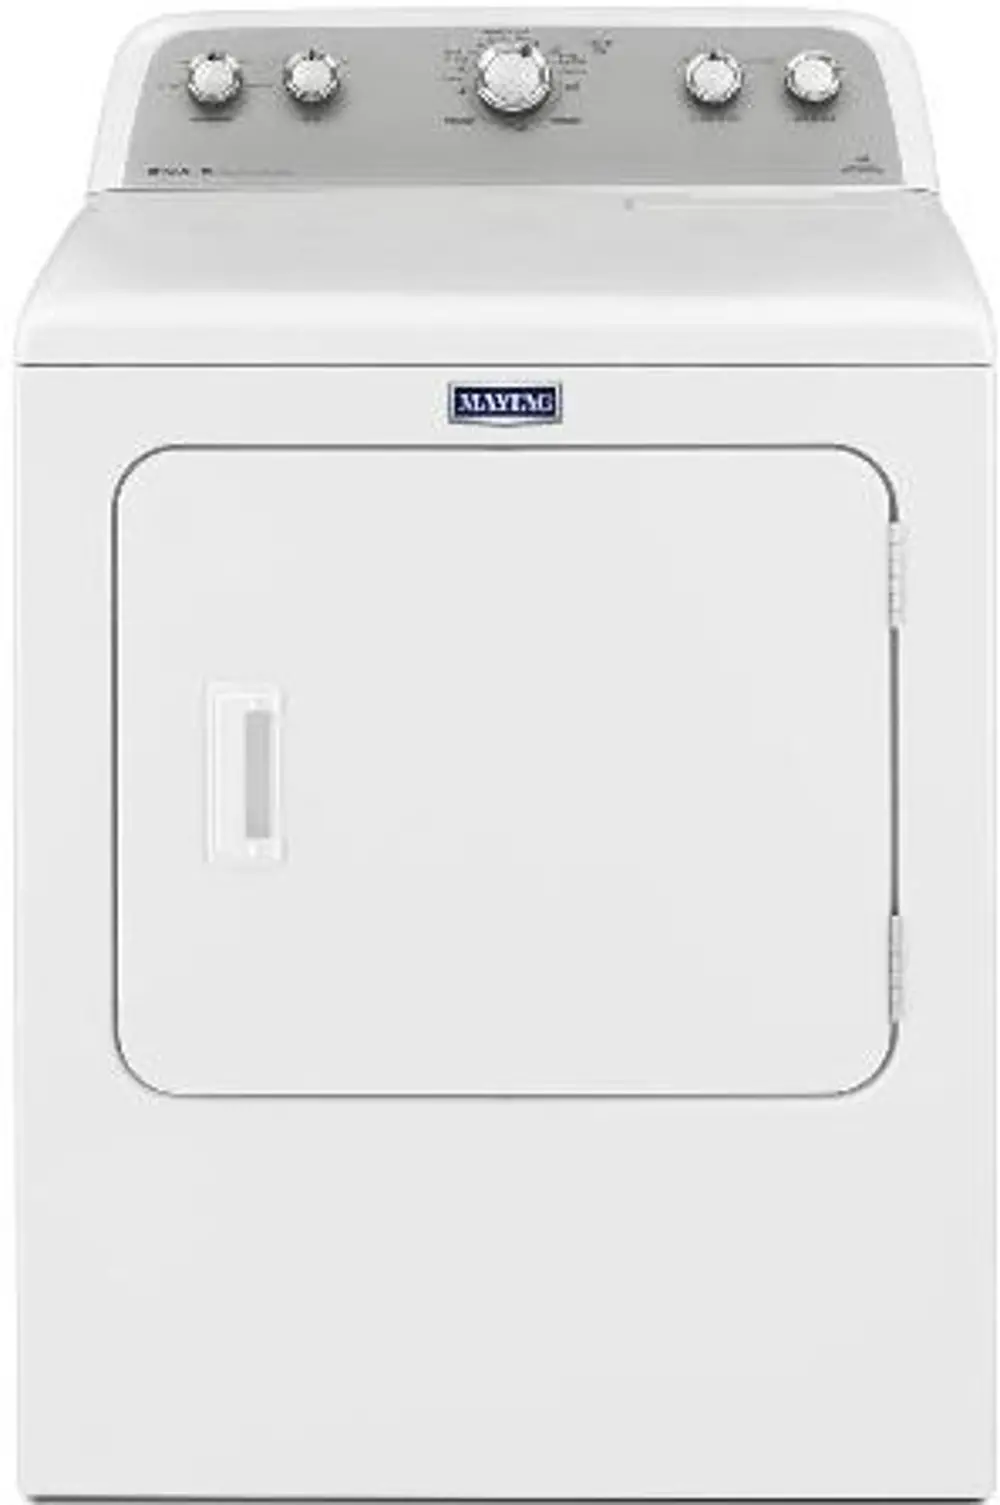 MEDX655DW Maytag Electric Dryer - 7.0 cu. ft. White-1